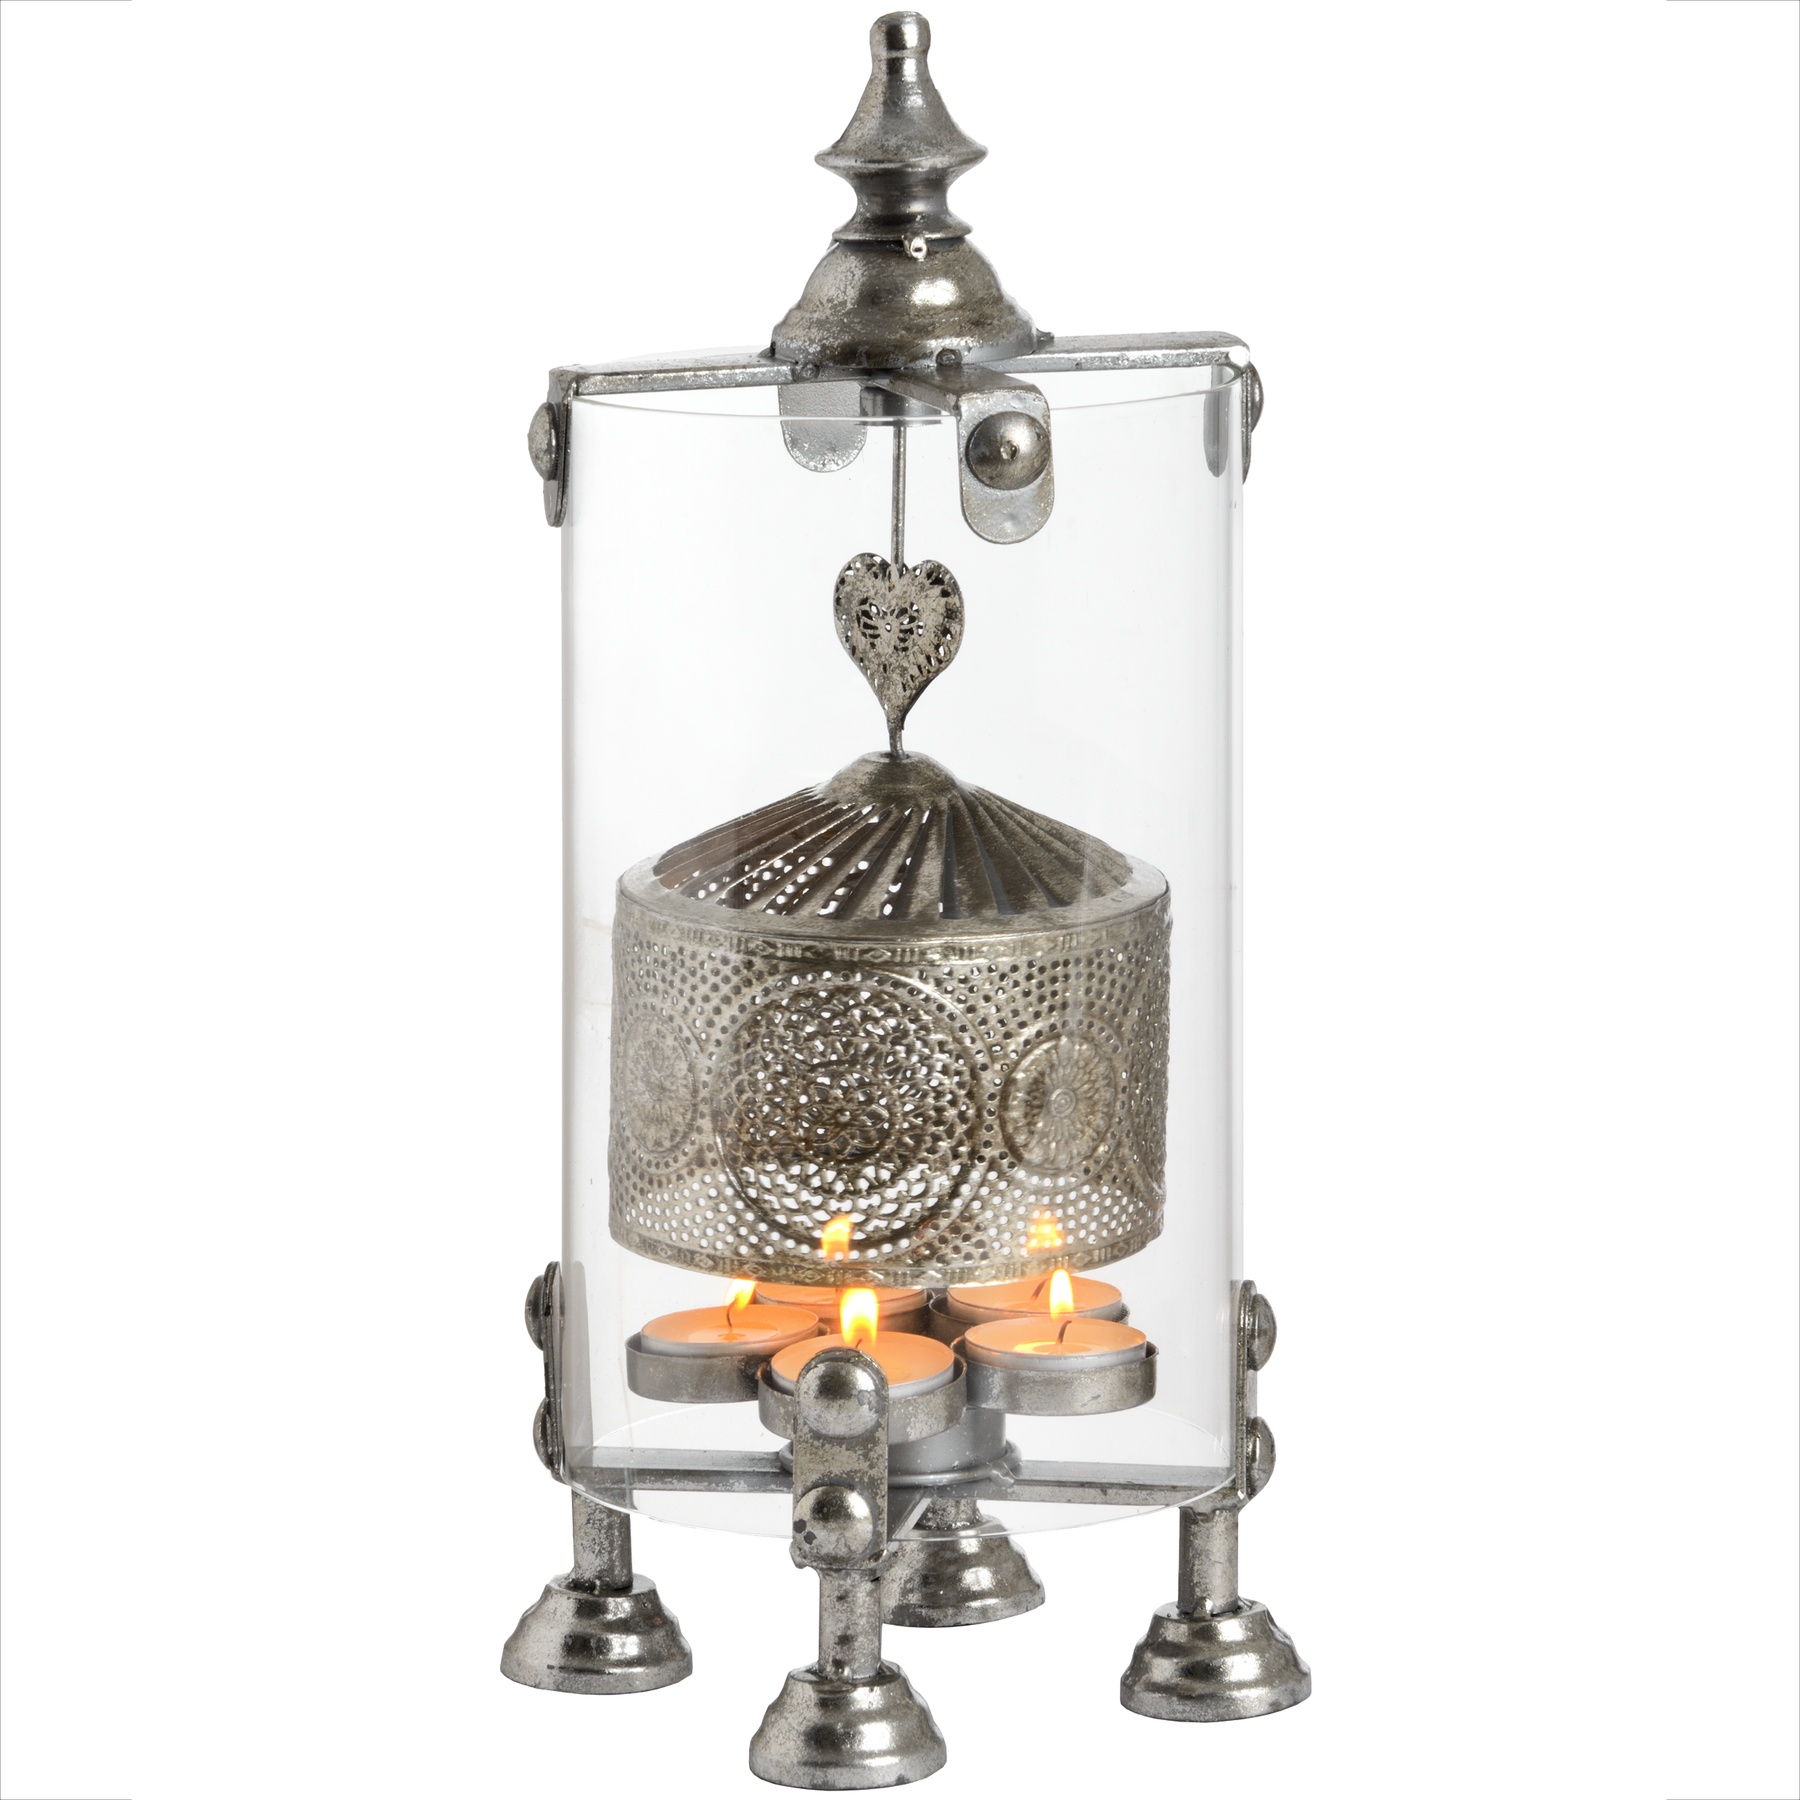 Antique Silver Heart Lantern Spinner - Image 1